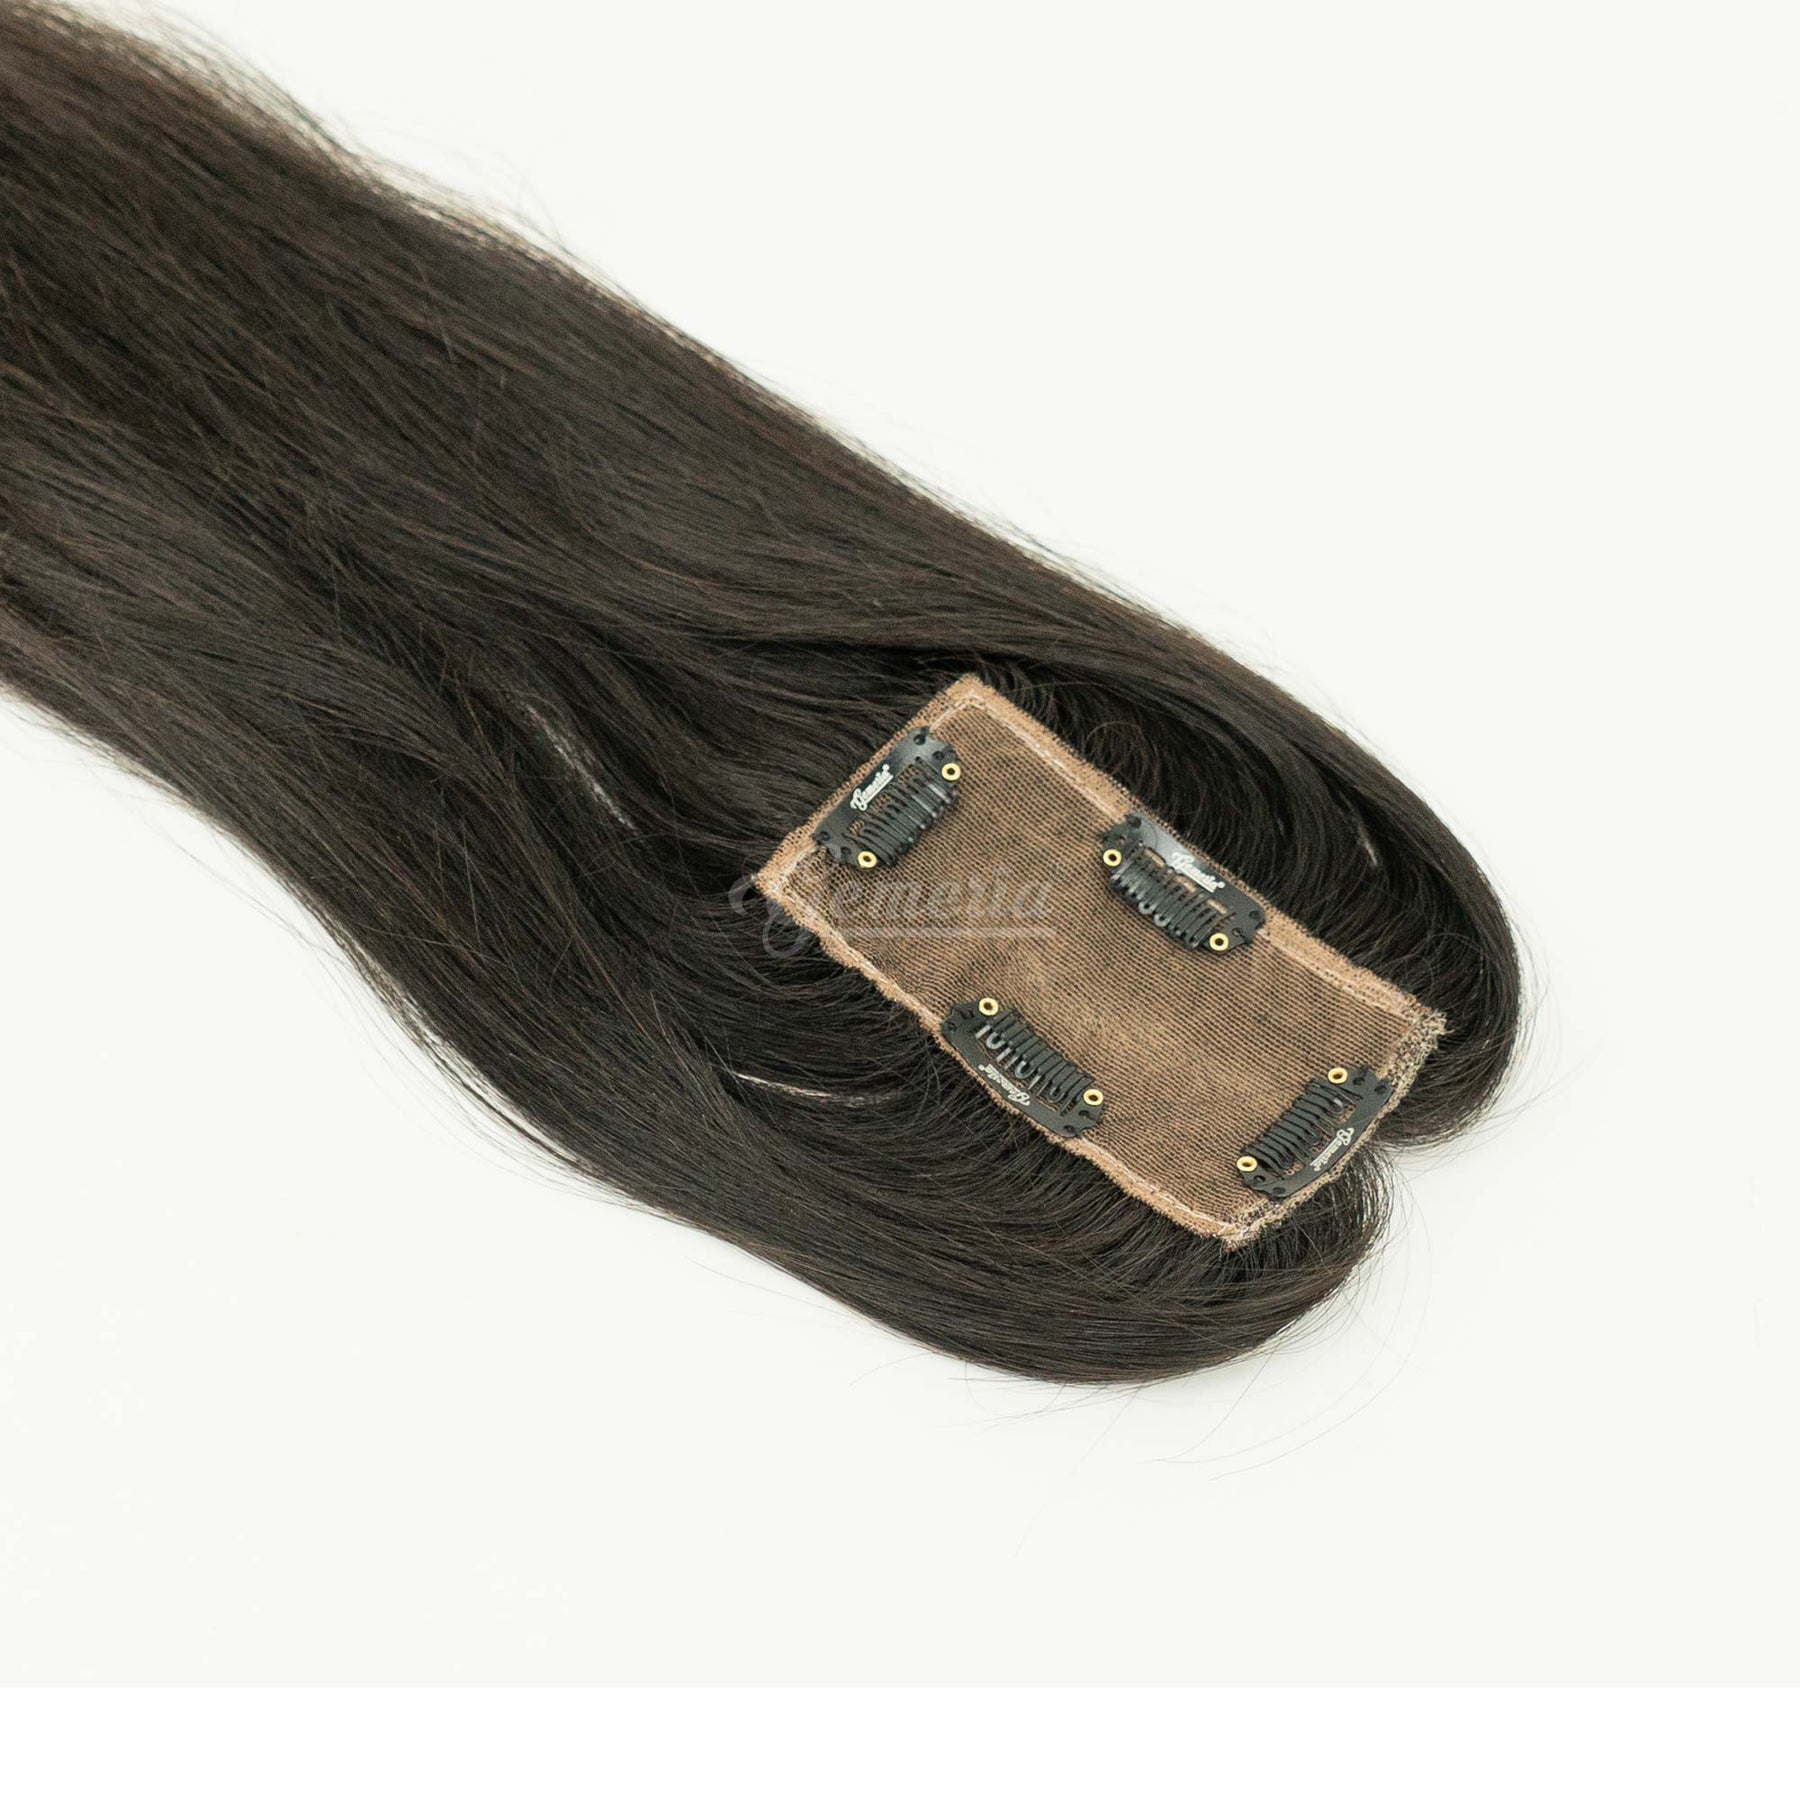 2x4 | Full Silk Hair Topper